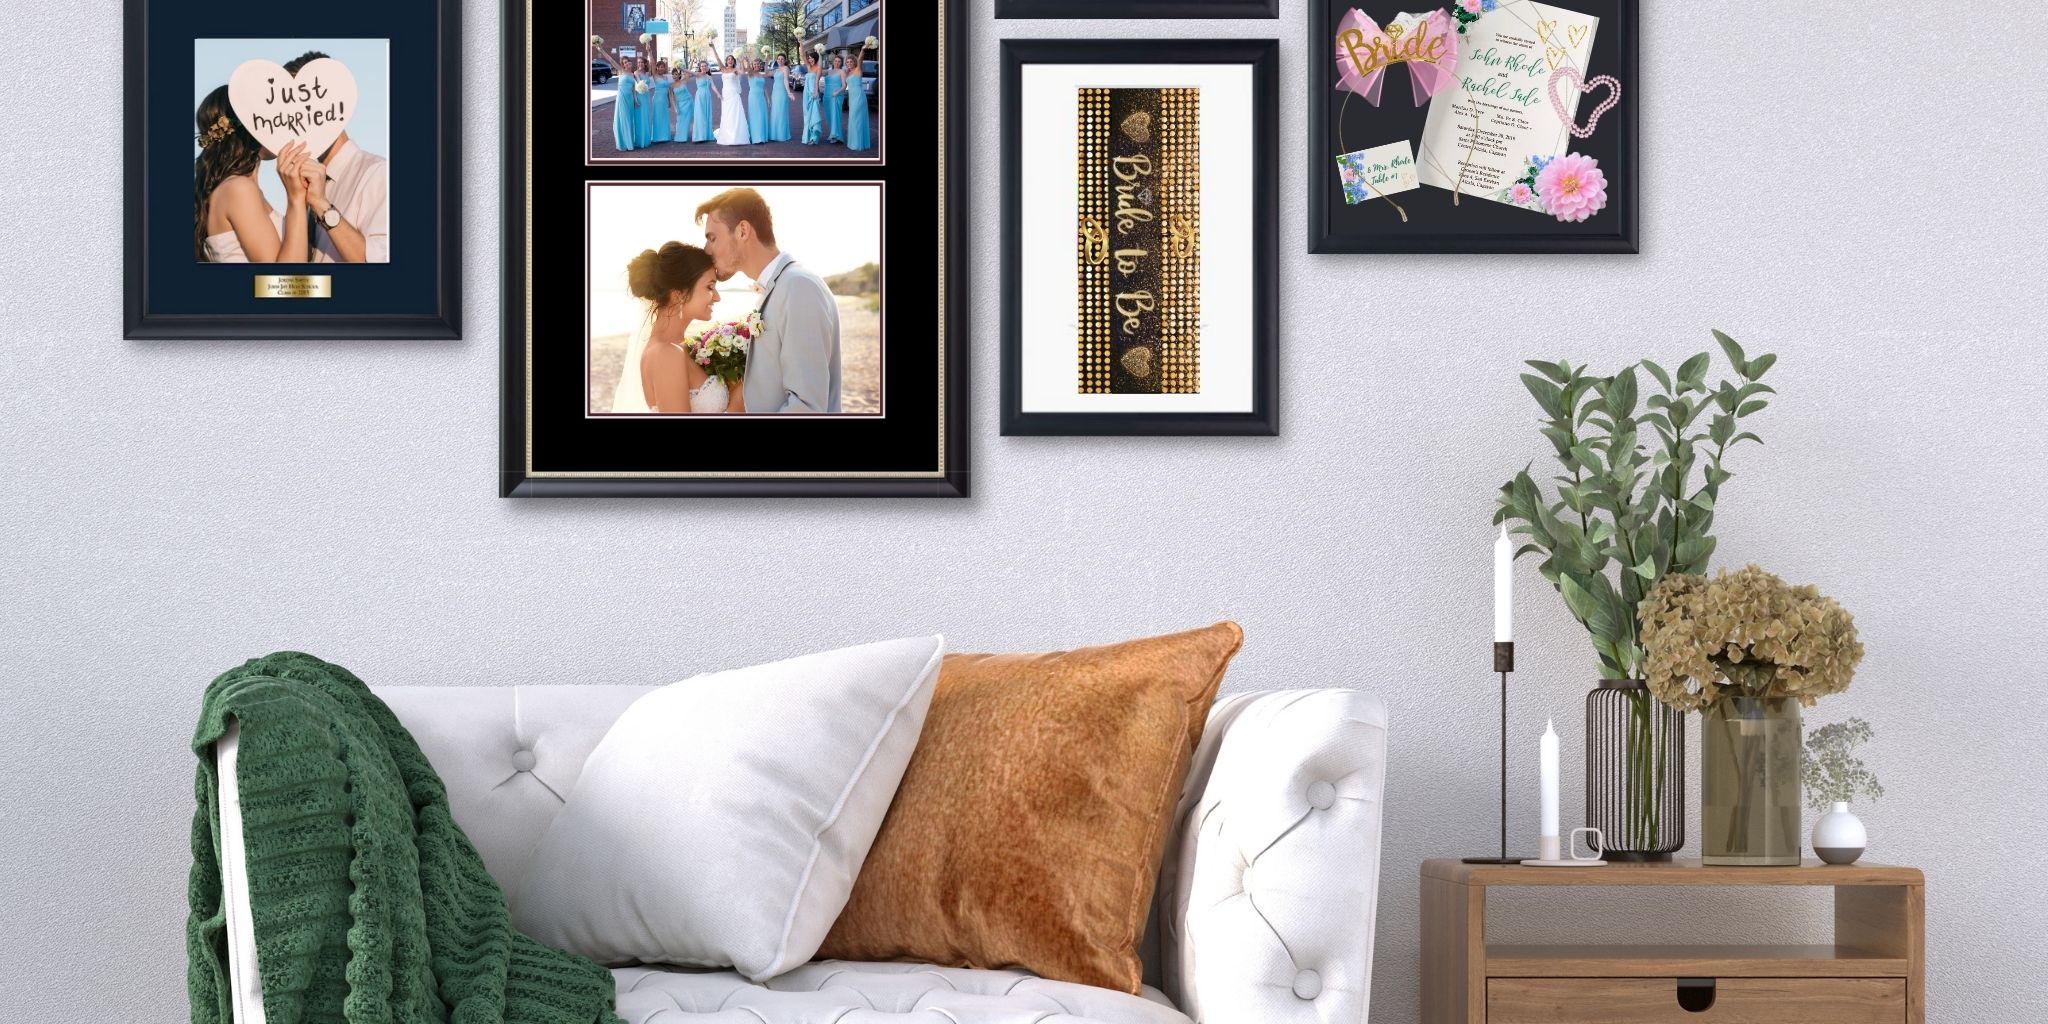 Wedding photos and bridal party keepsakes on wall